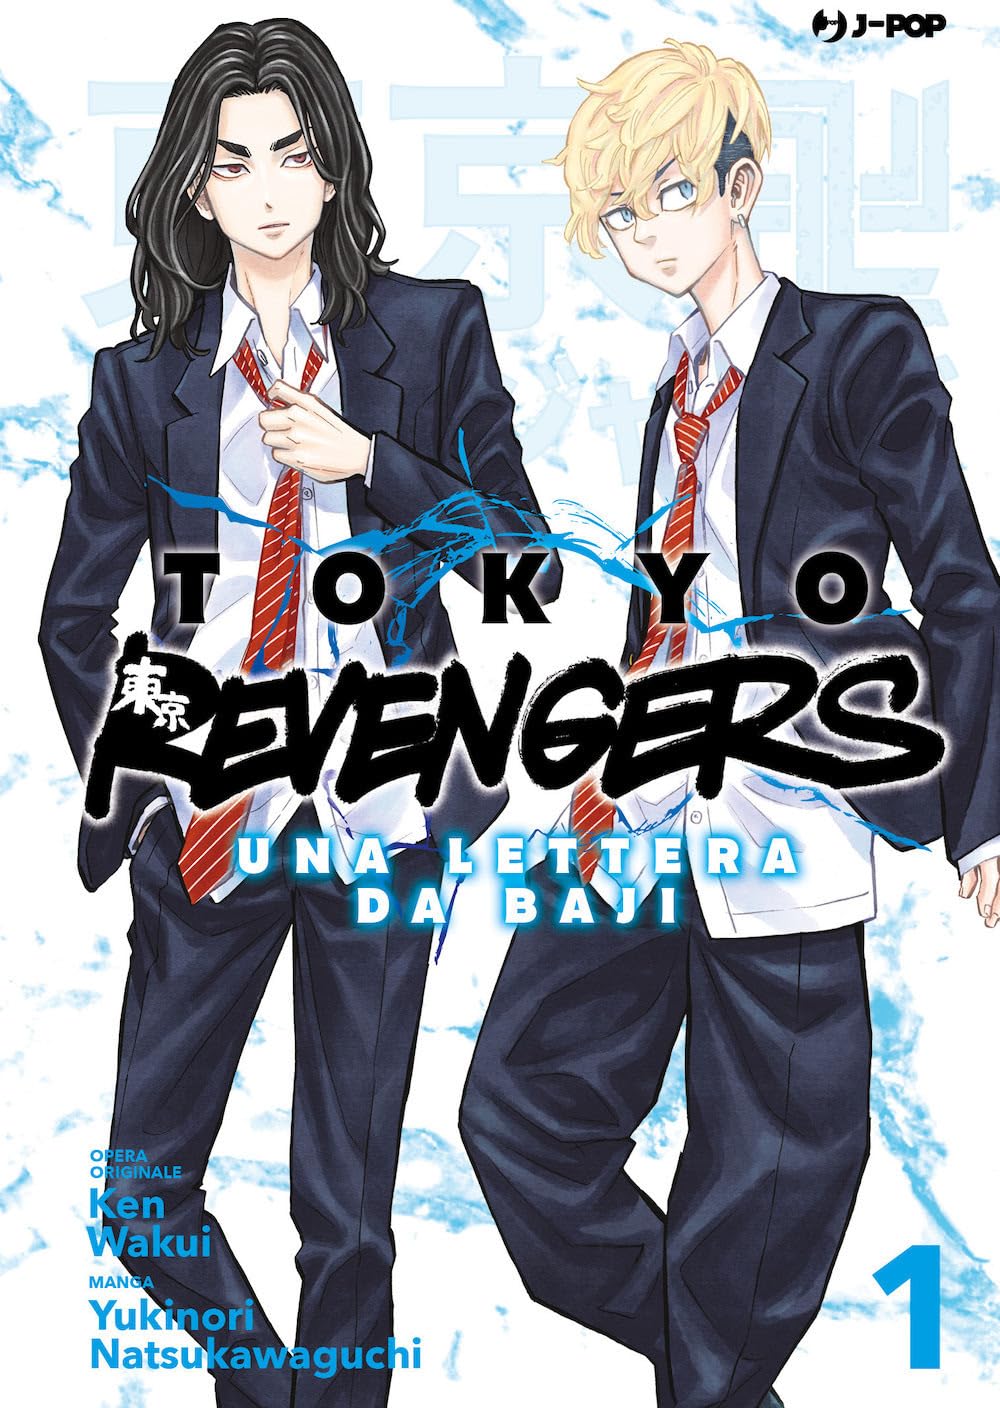 JPOP TOKYO REVENGERS UNA LETTERA DA BAJI #001